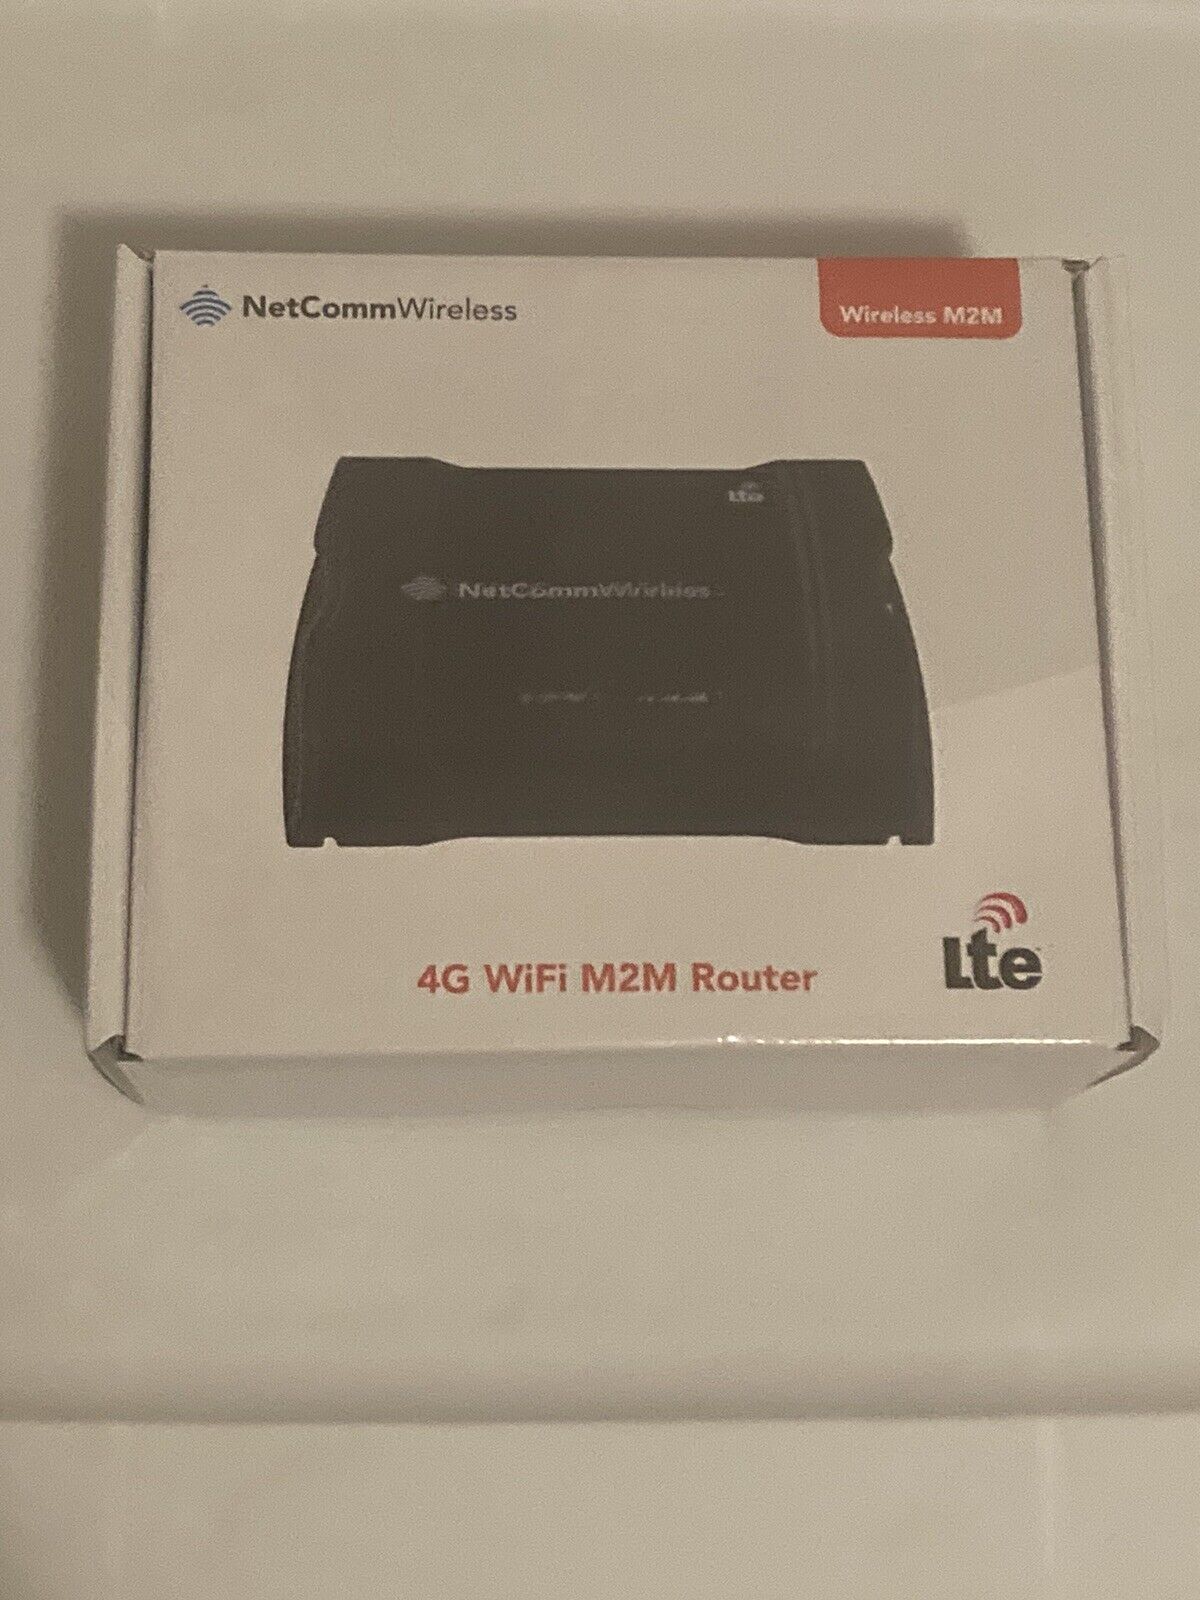 NetComm Wireless NTC-140W-01 WiFi M2M Router 4G LTE Linux Modem